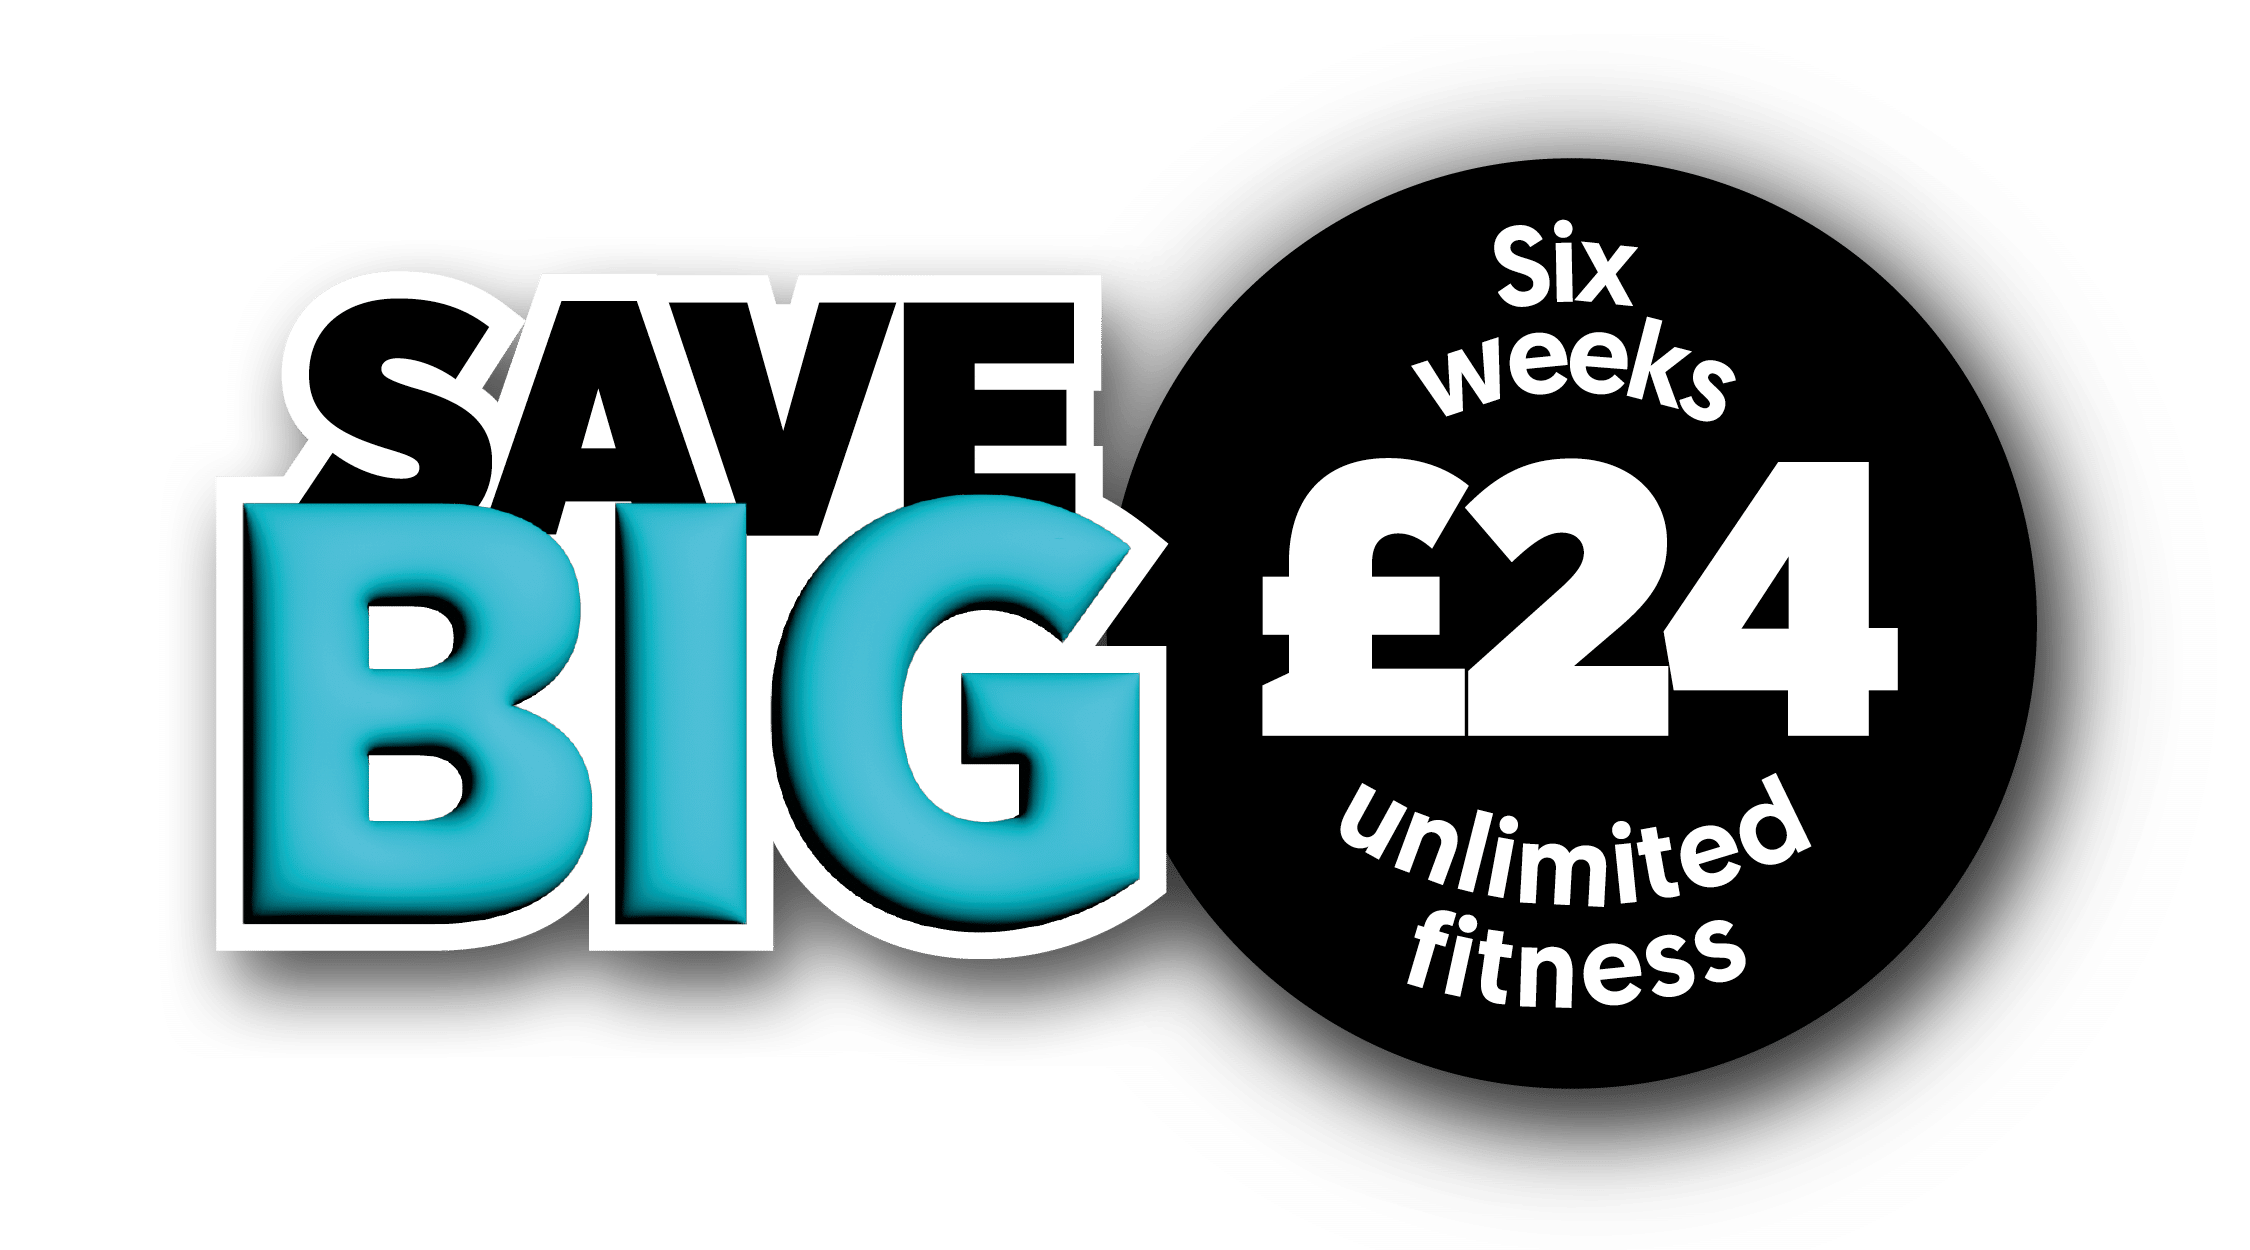 Save big six weeks unlimited fitness £24